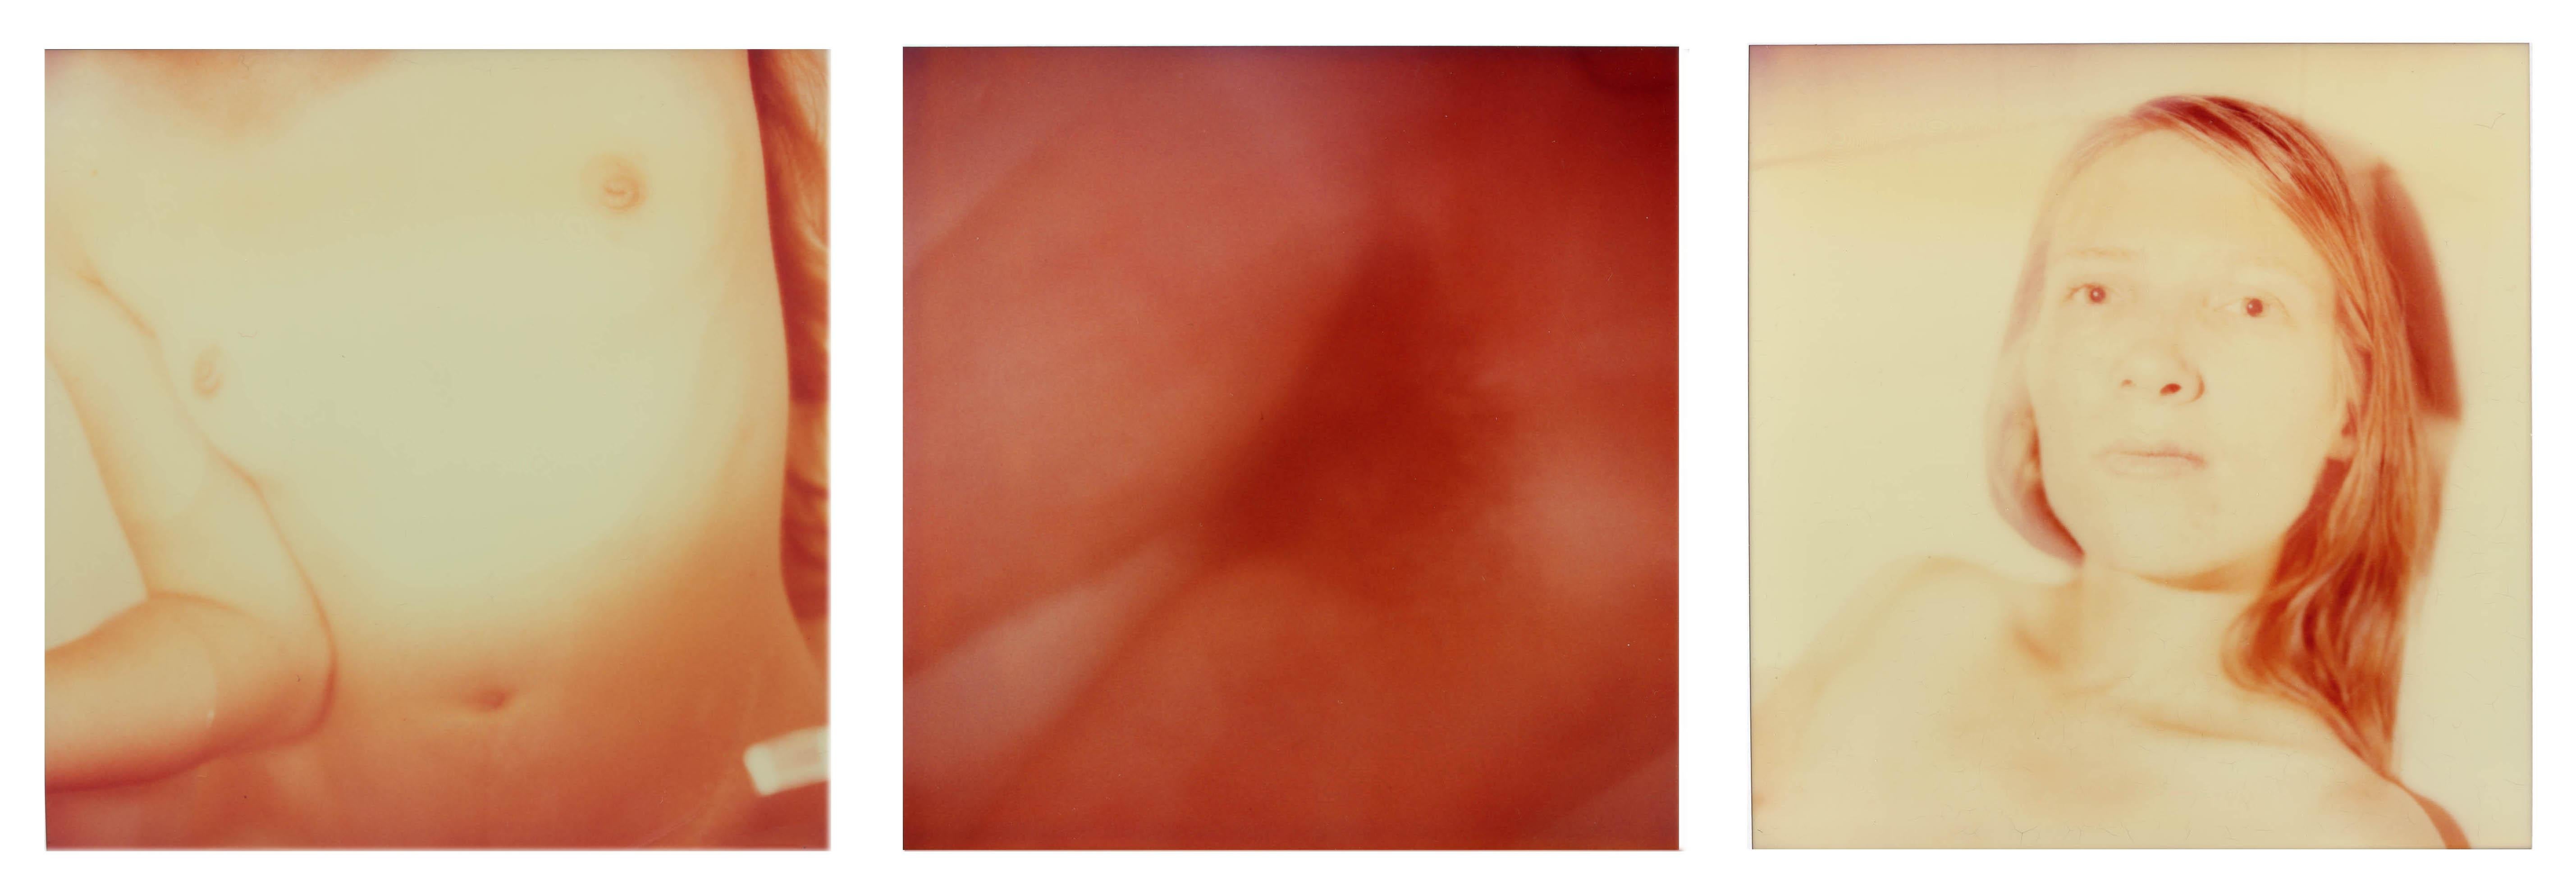 Stefanie Schneider Nude Photograph - Strange Love, triptych - analog, mounted, Nude, Contemporary, Polaroid